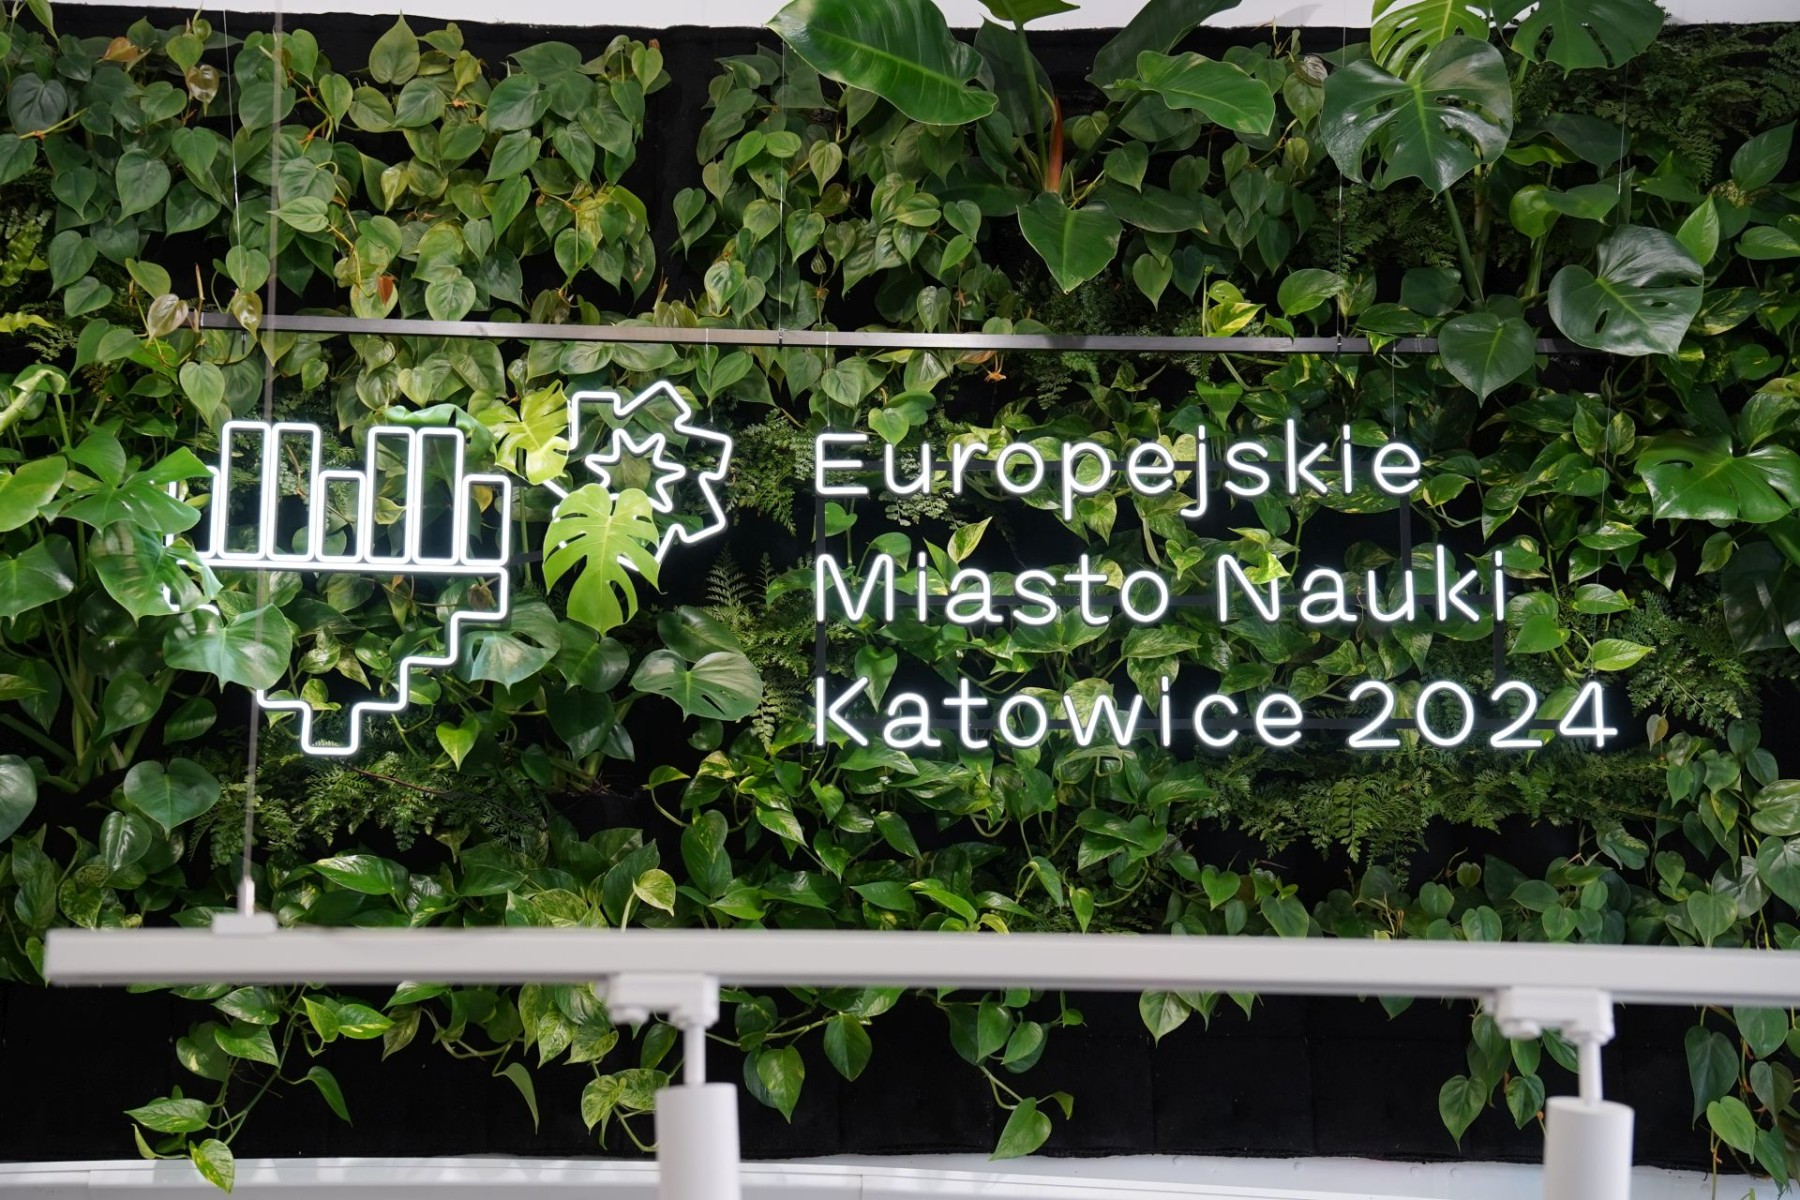 Europejskie Miasto Nauki Katowice 2024 - Kato Science Corner